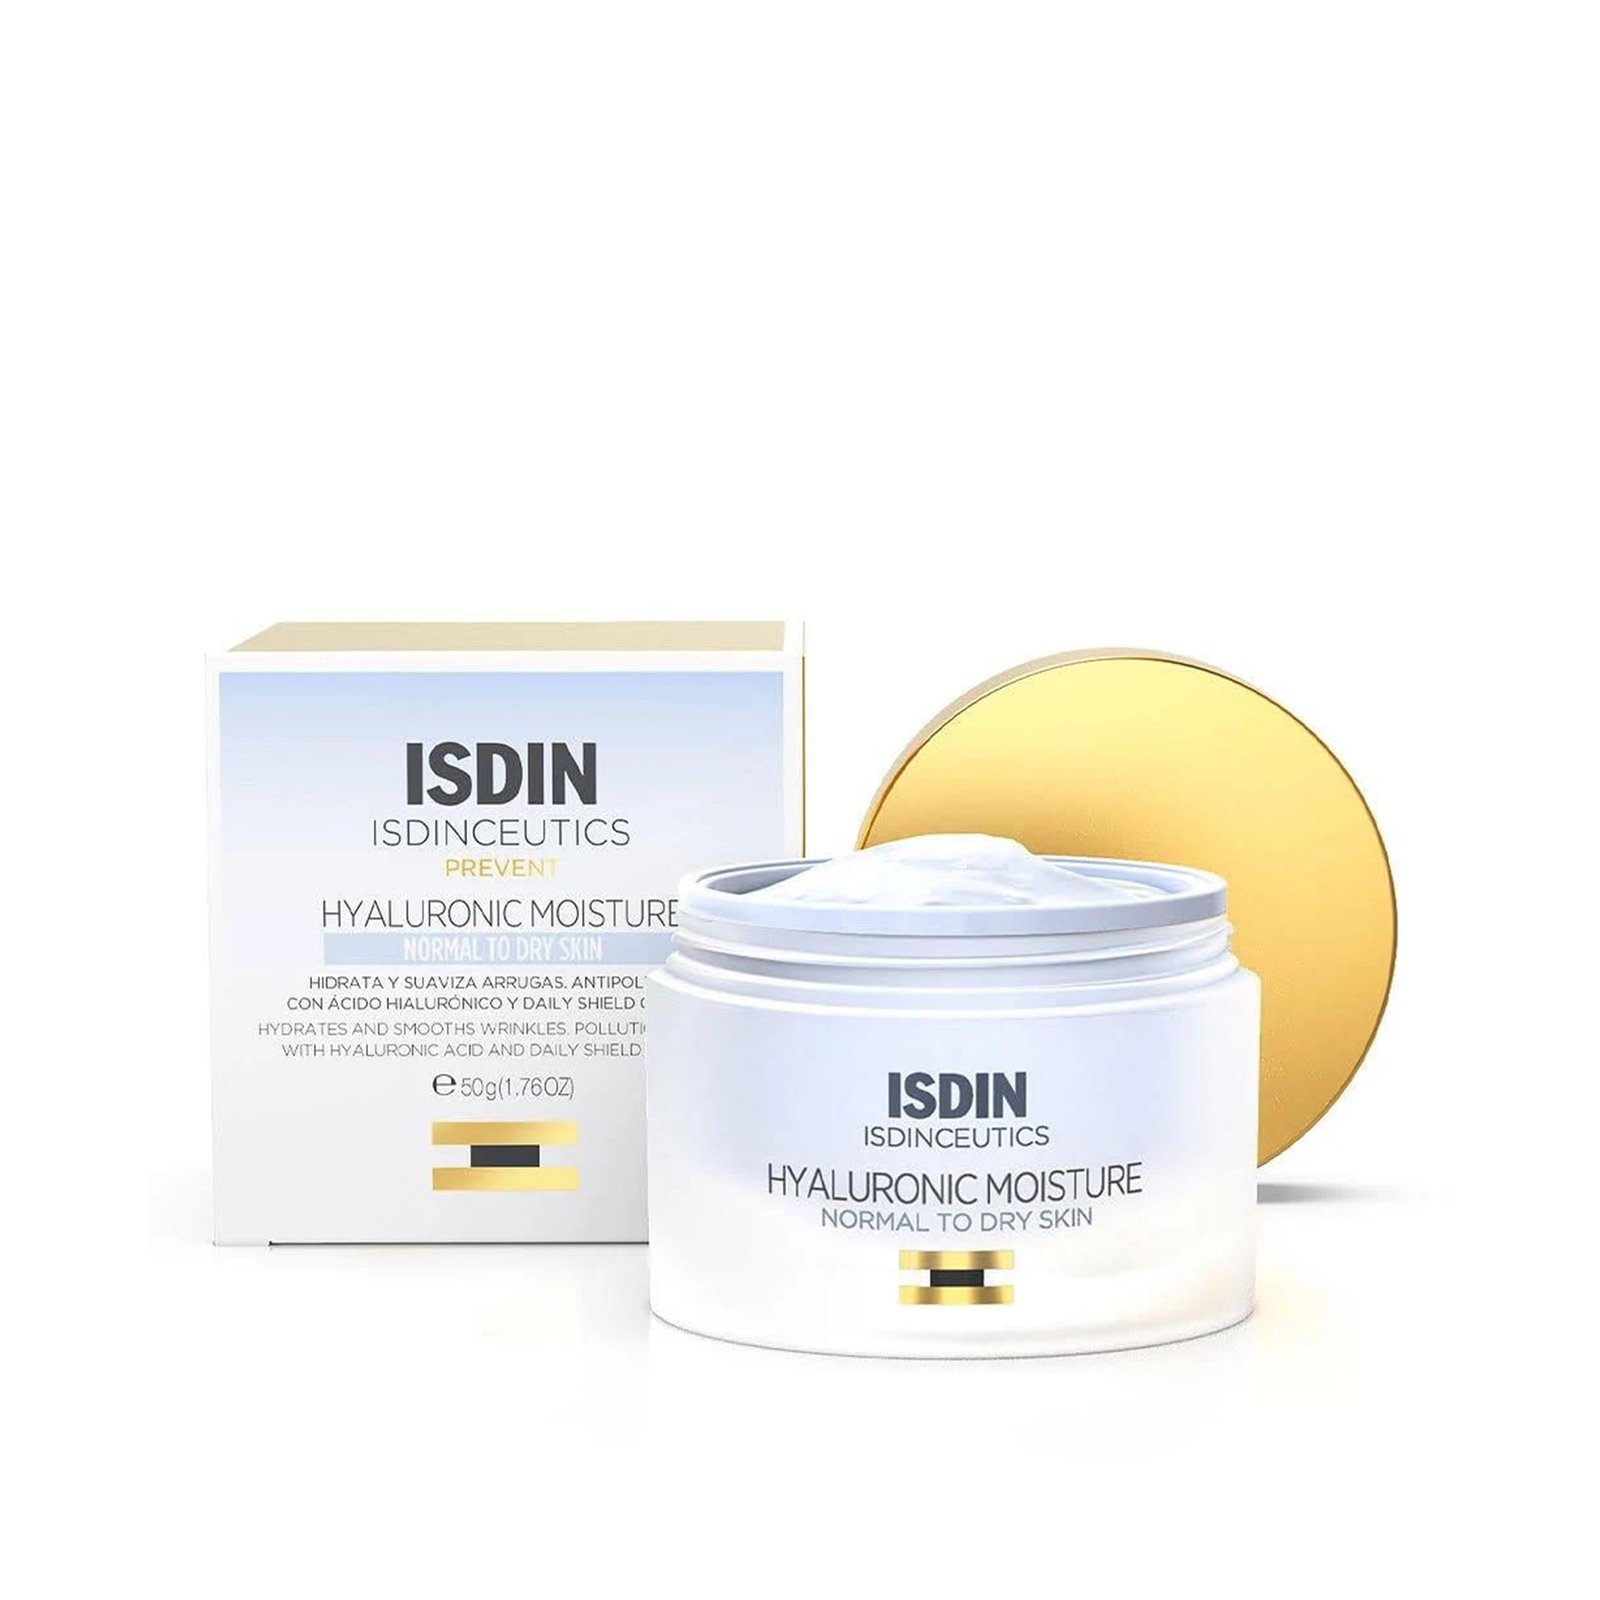 ISDINCEUTICS Hyaluronic Moisture Cream Normal To Dry Skin 50g